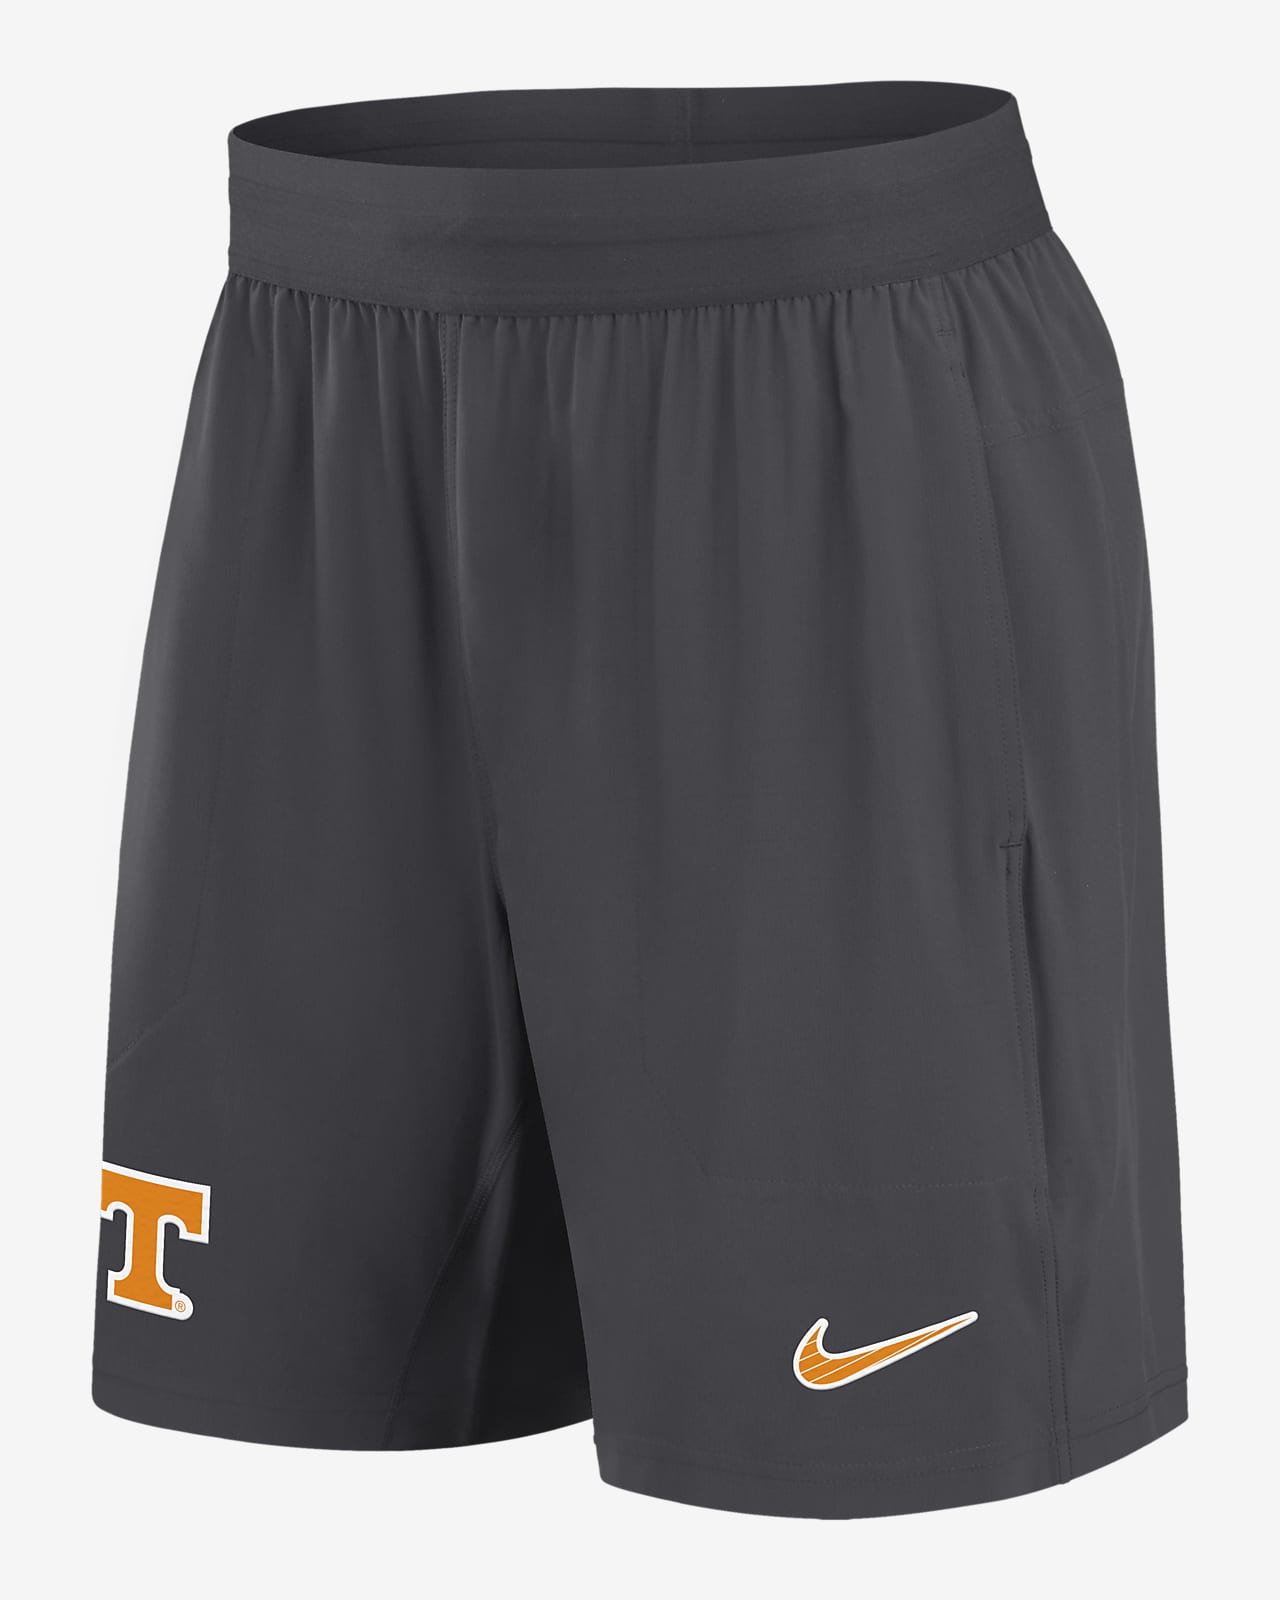 Shorts universitarios Nike Dri-FIT para hombre Tennessee Volunteers Sideline